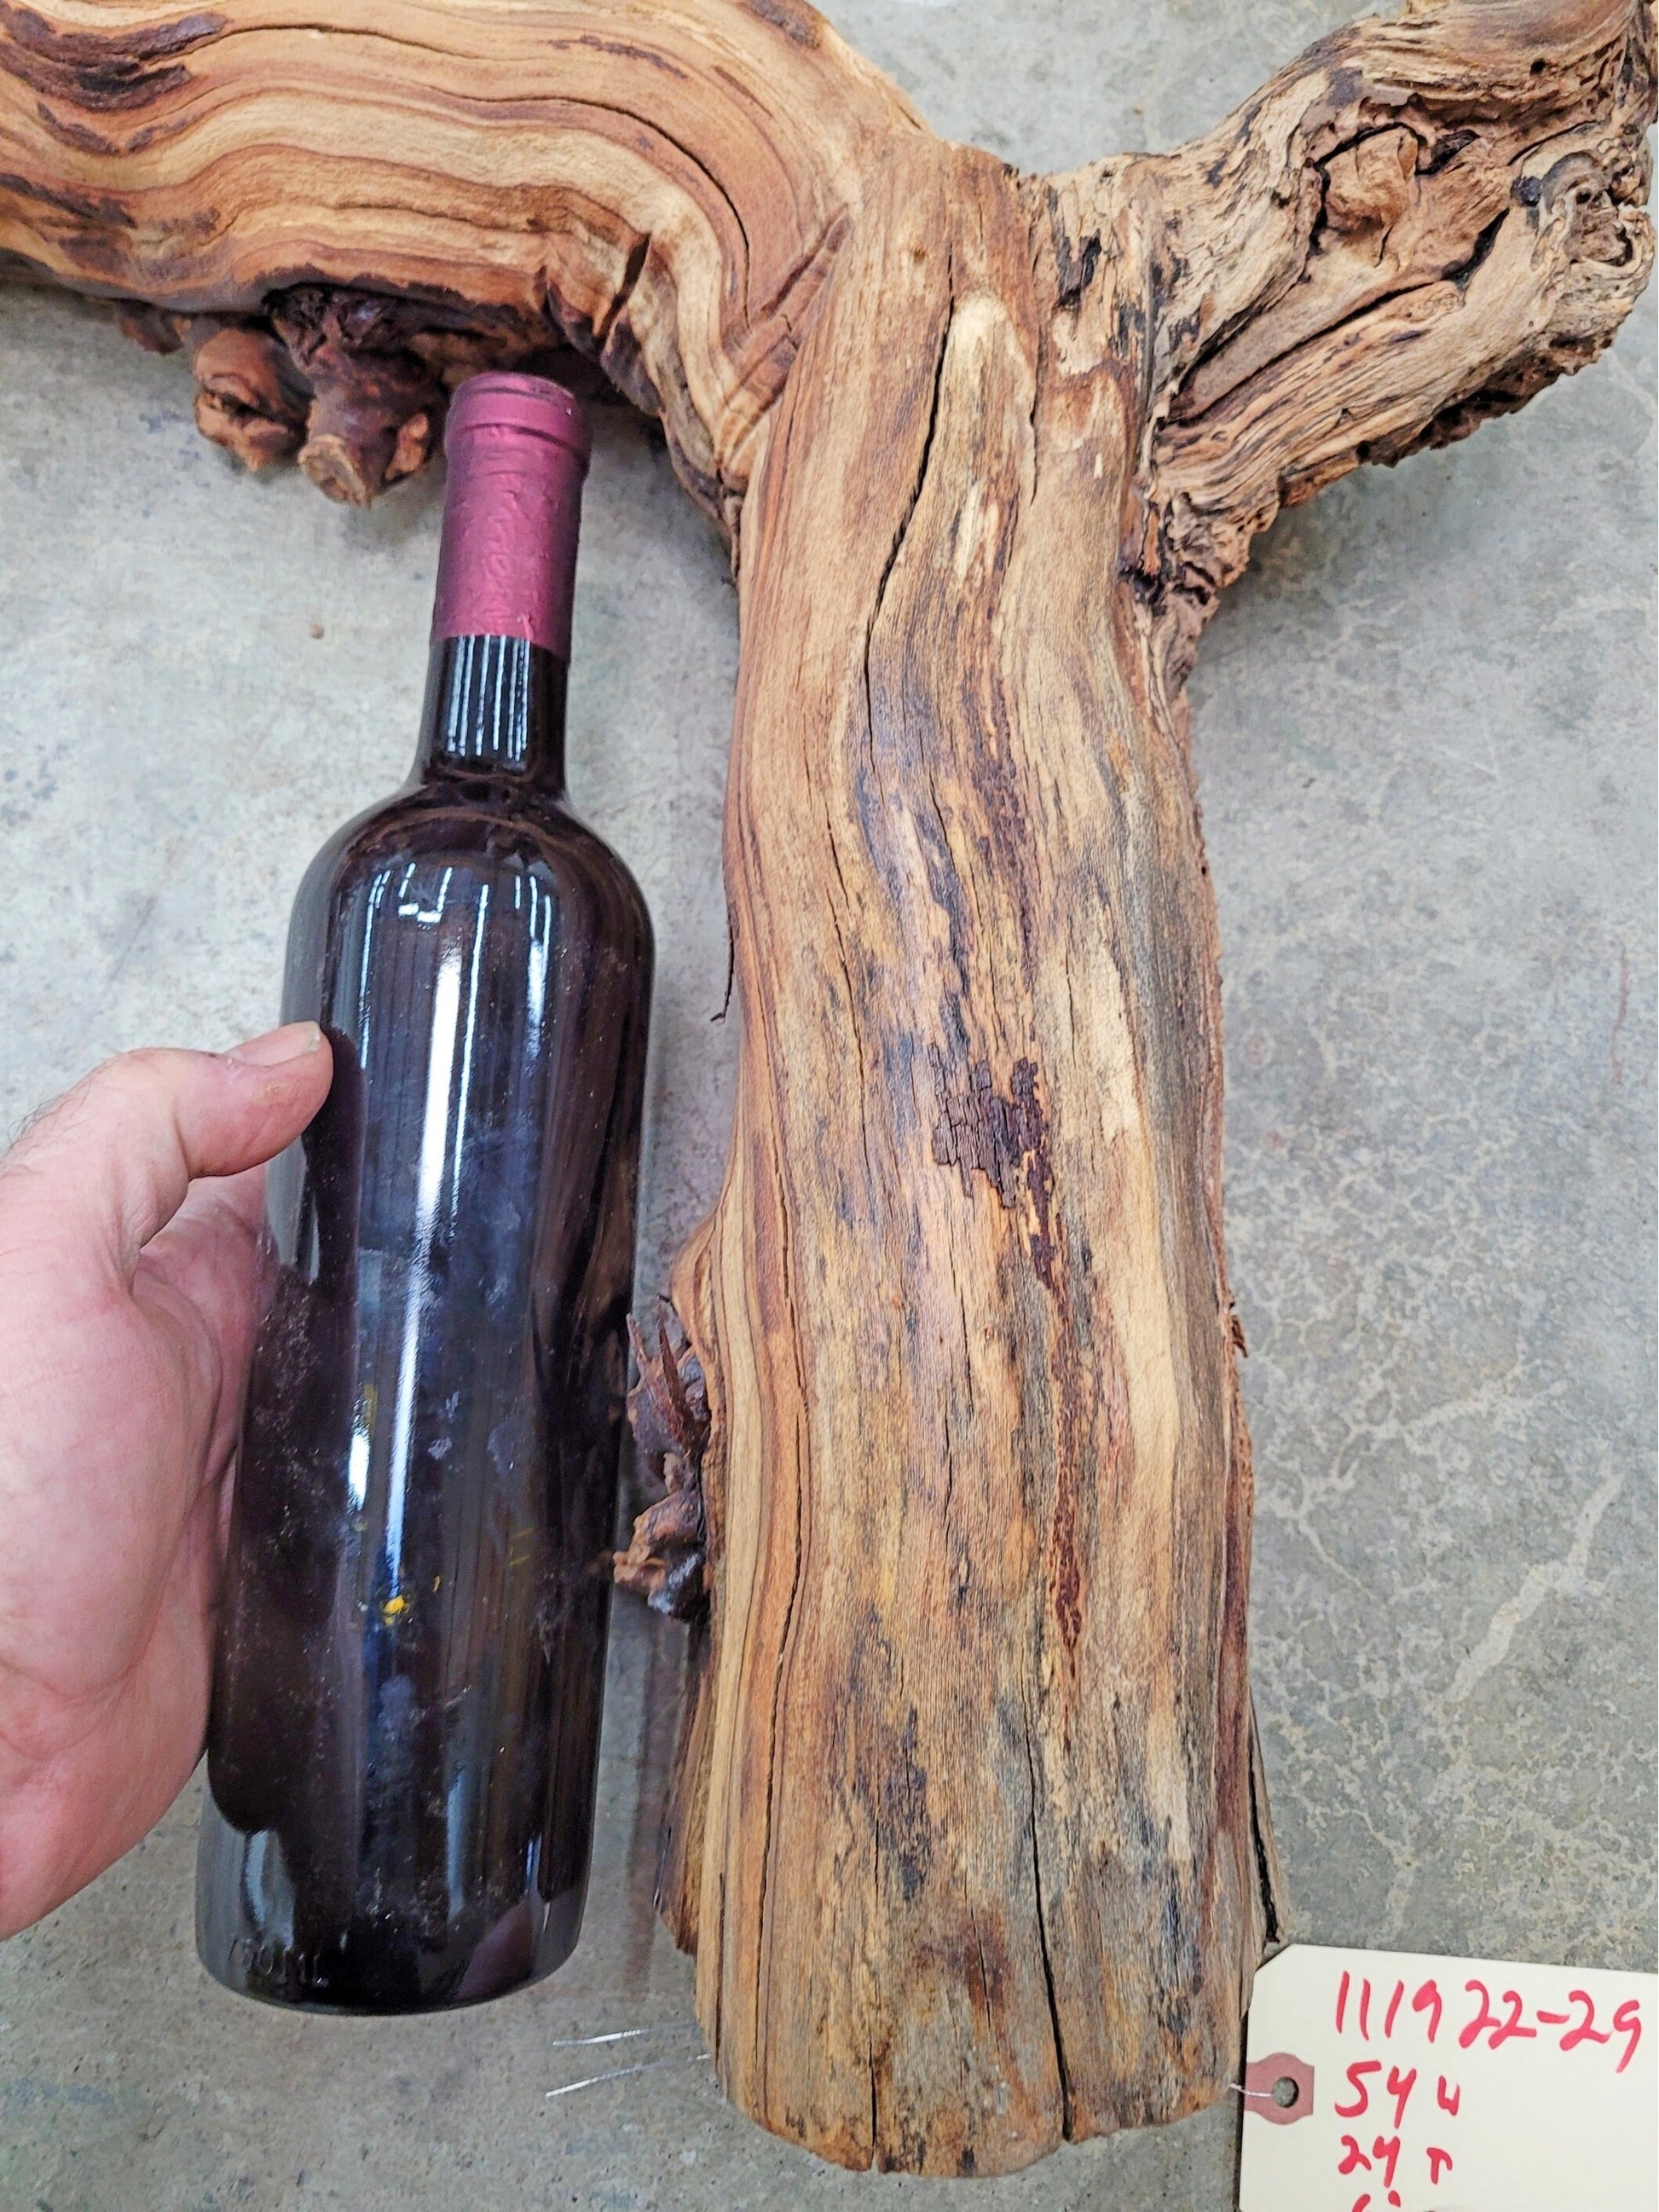 Hendry Winery retired Petit Verdot Grape Vine Art - 100% Reclaimed + Ready to Ship! 111922-29